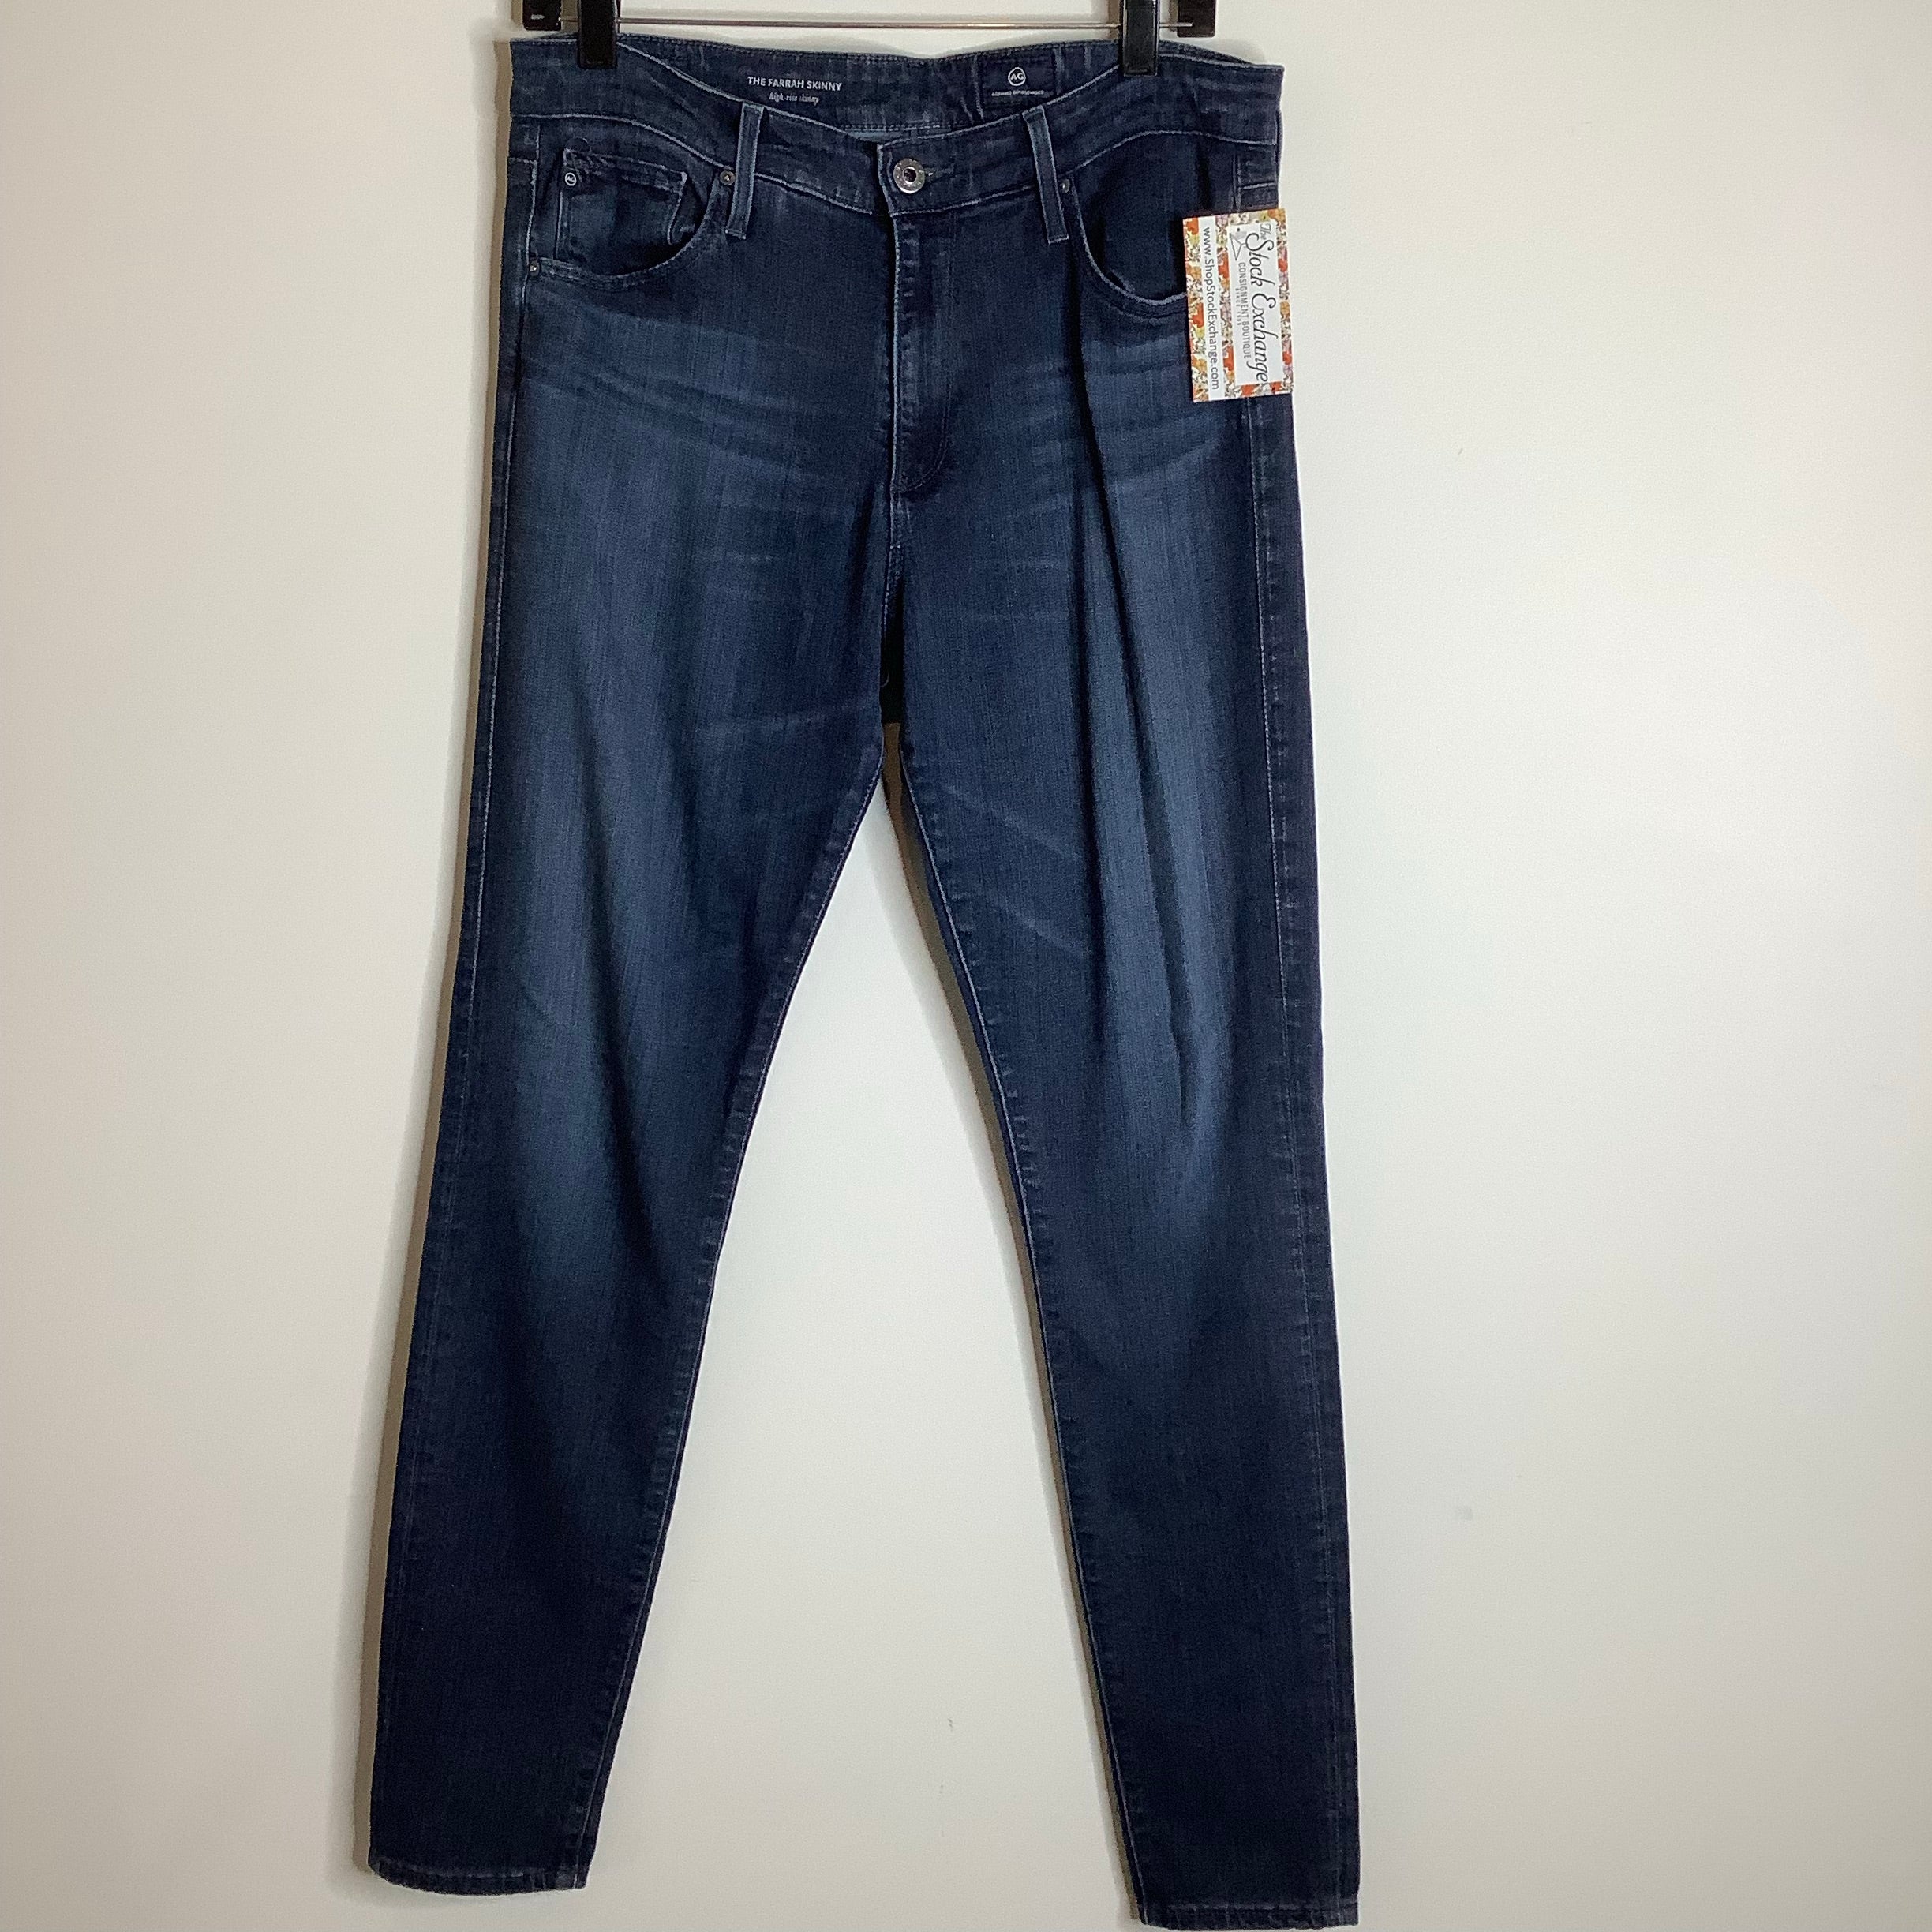 Adriano Goldschmied Blue Jeans Size 30